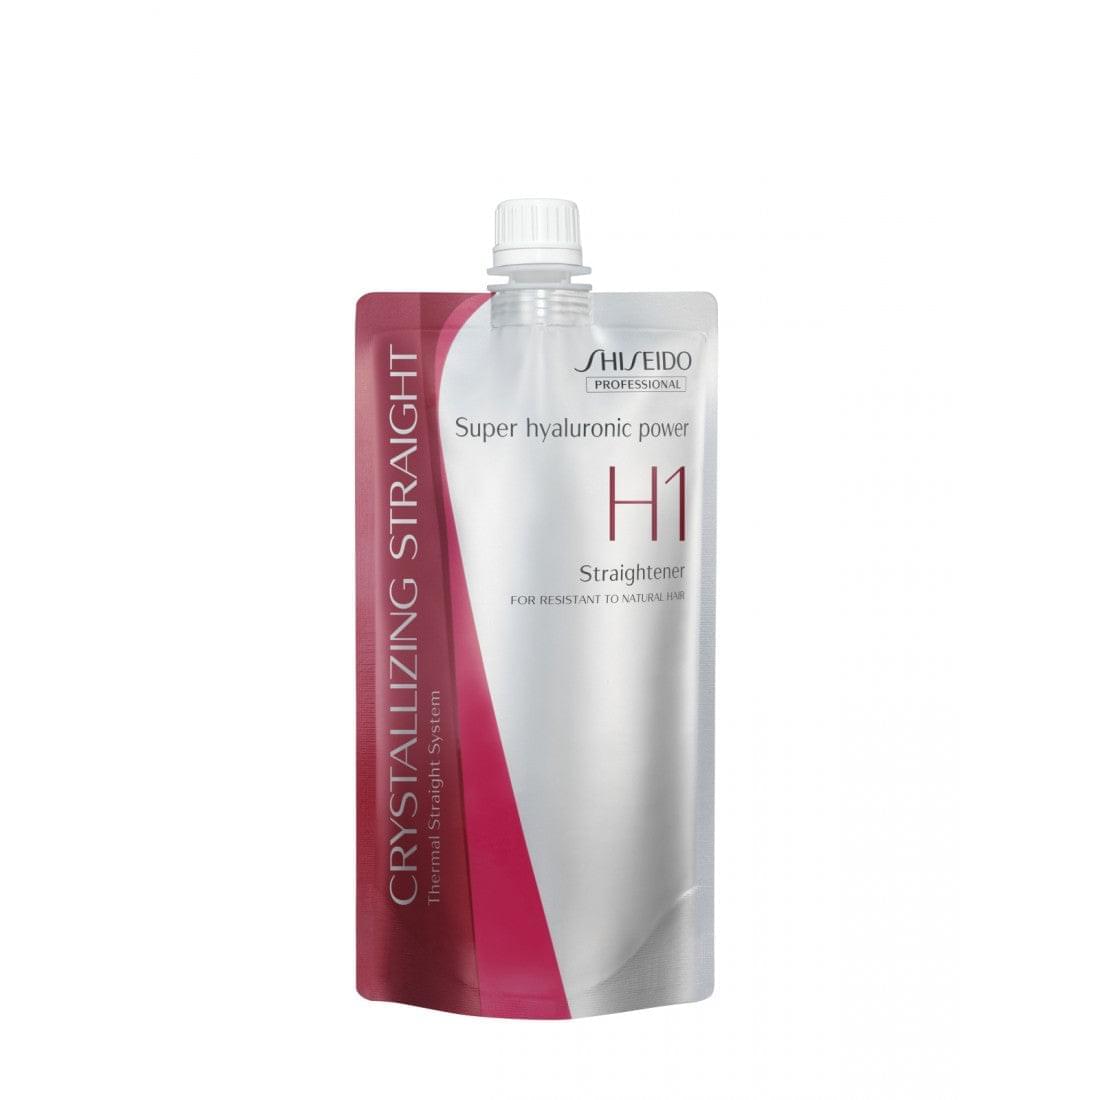 Crystallizing Straight H1 – 400g + Nutralising Cream 400g For Natural Hair Resistance